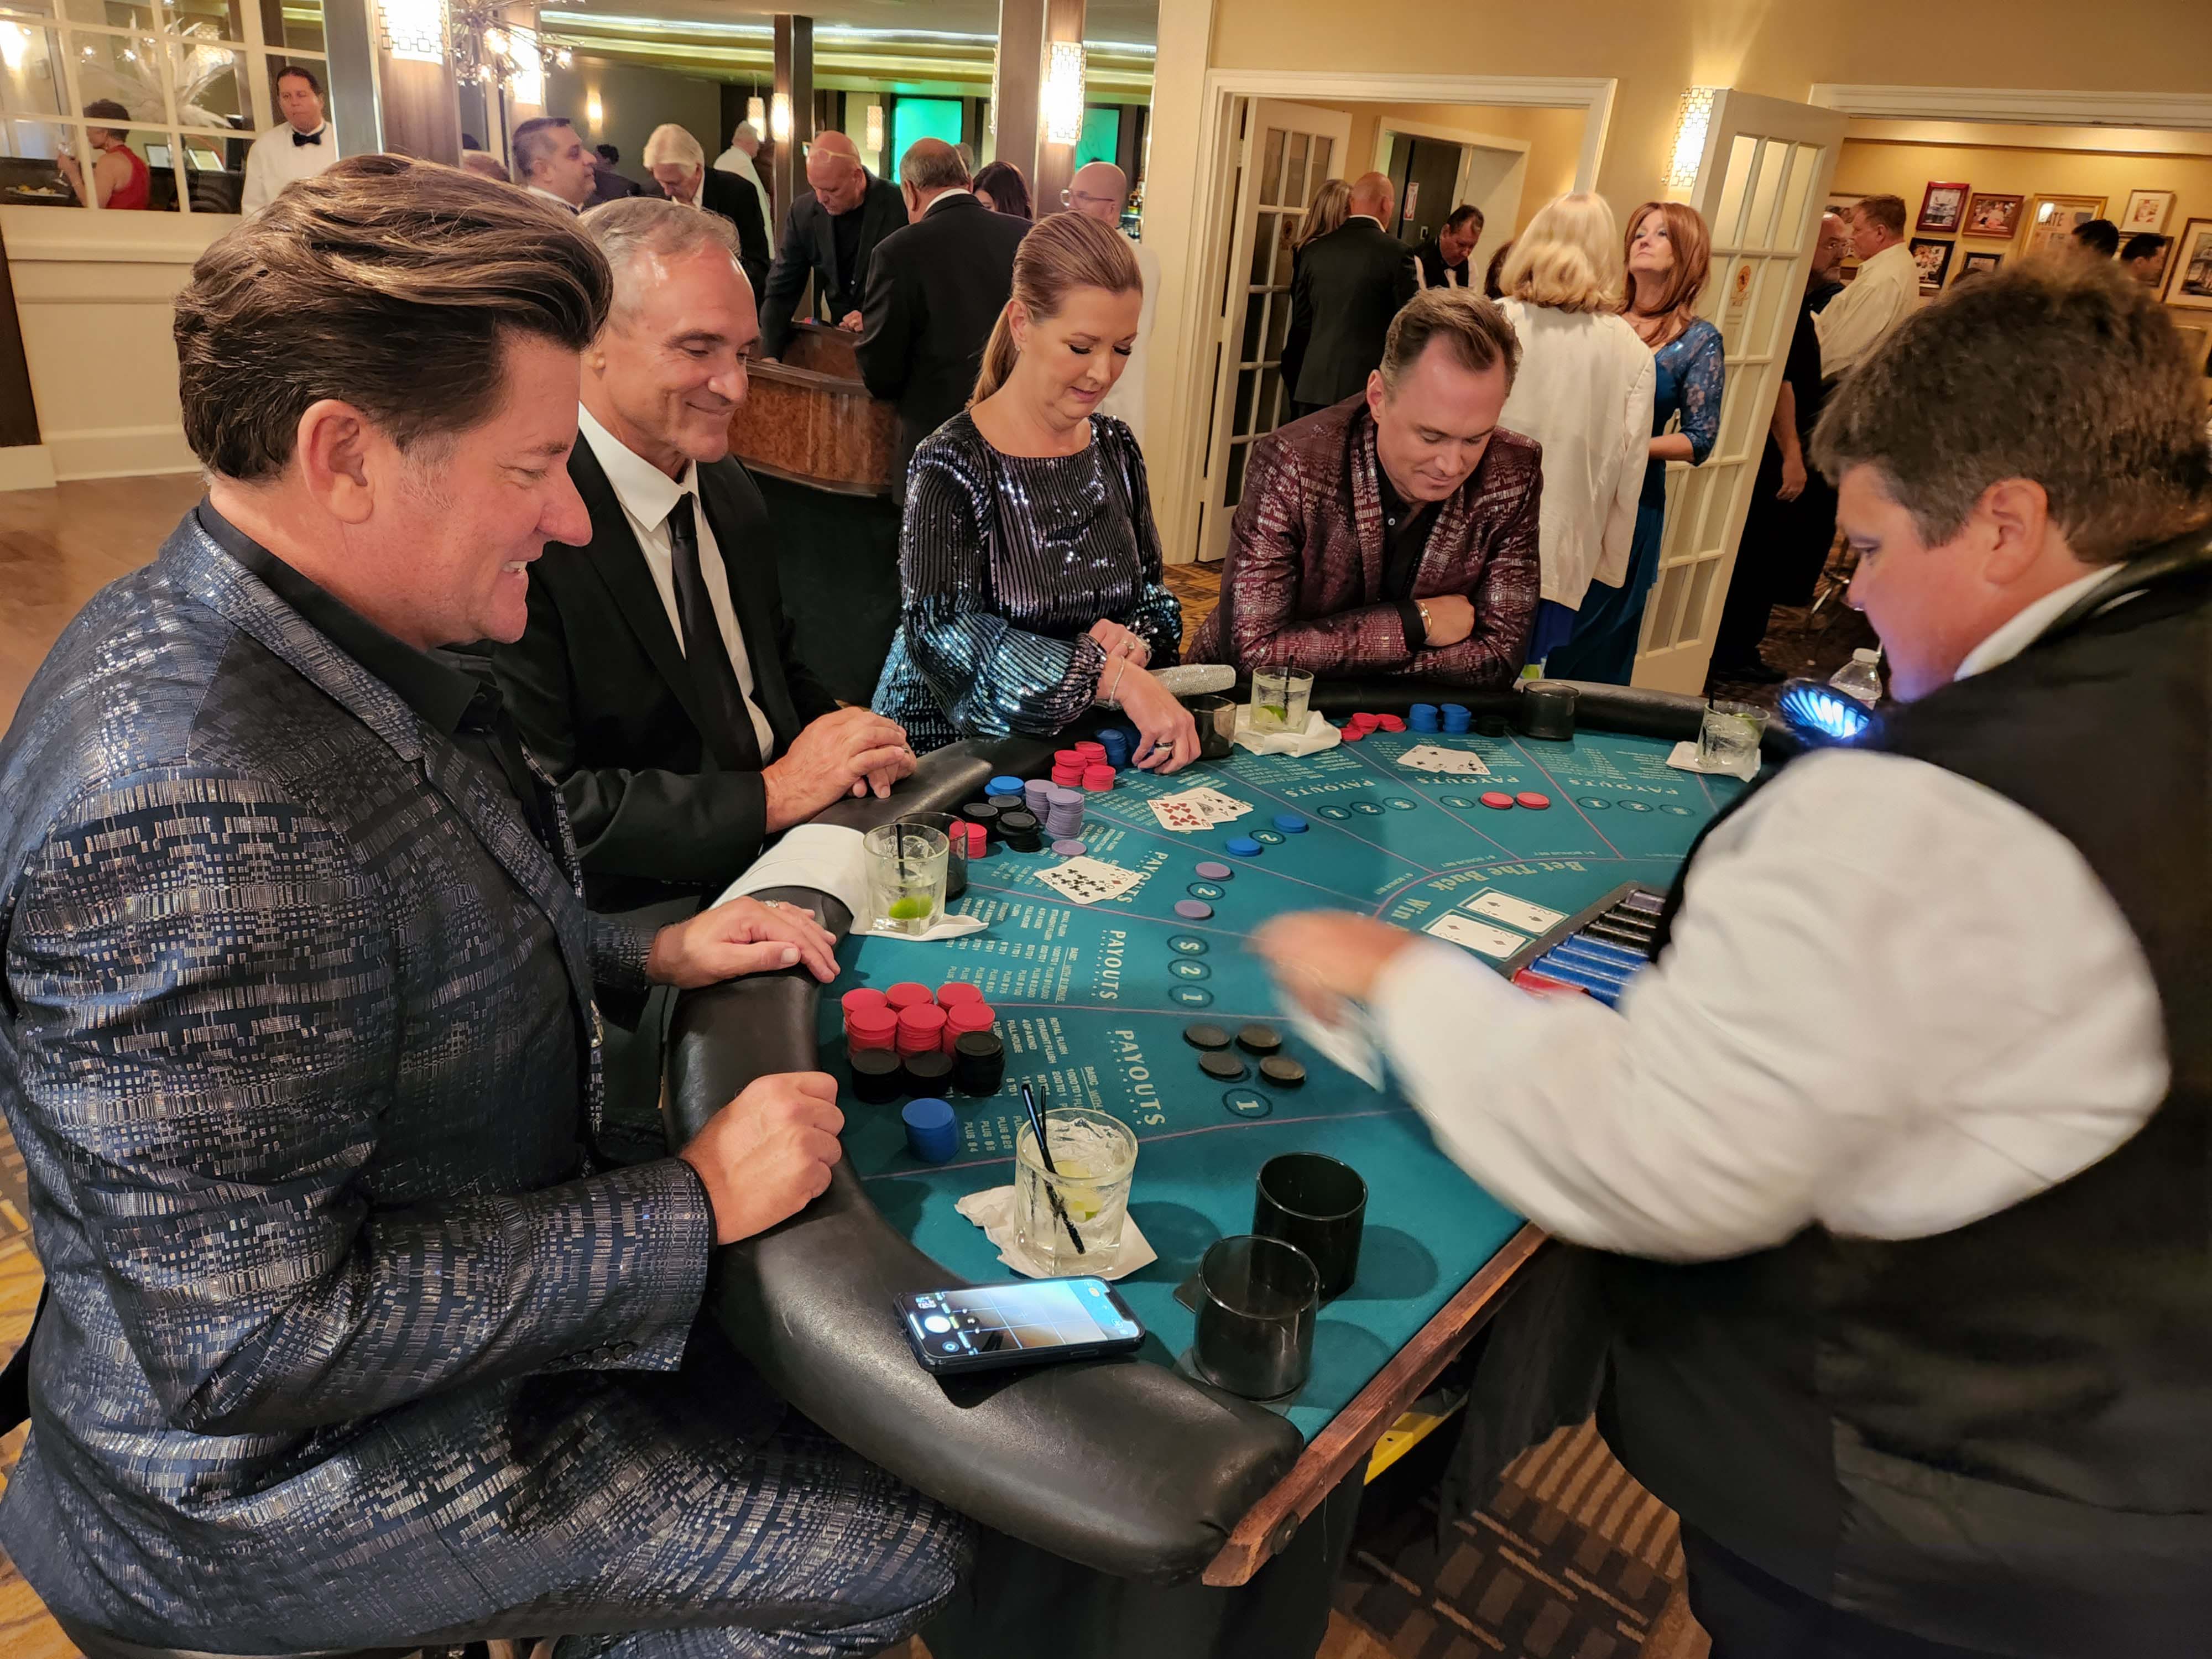 Blackjack players enjoying the festivities at a charity fundraiser in Galveston.